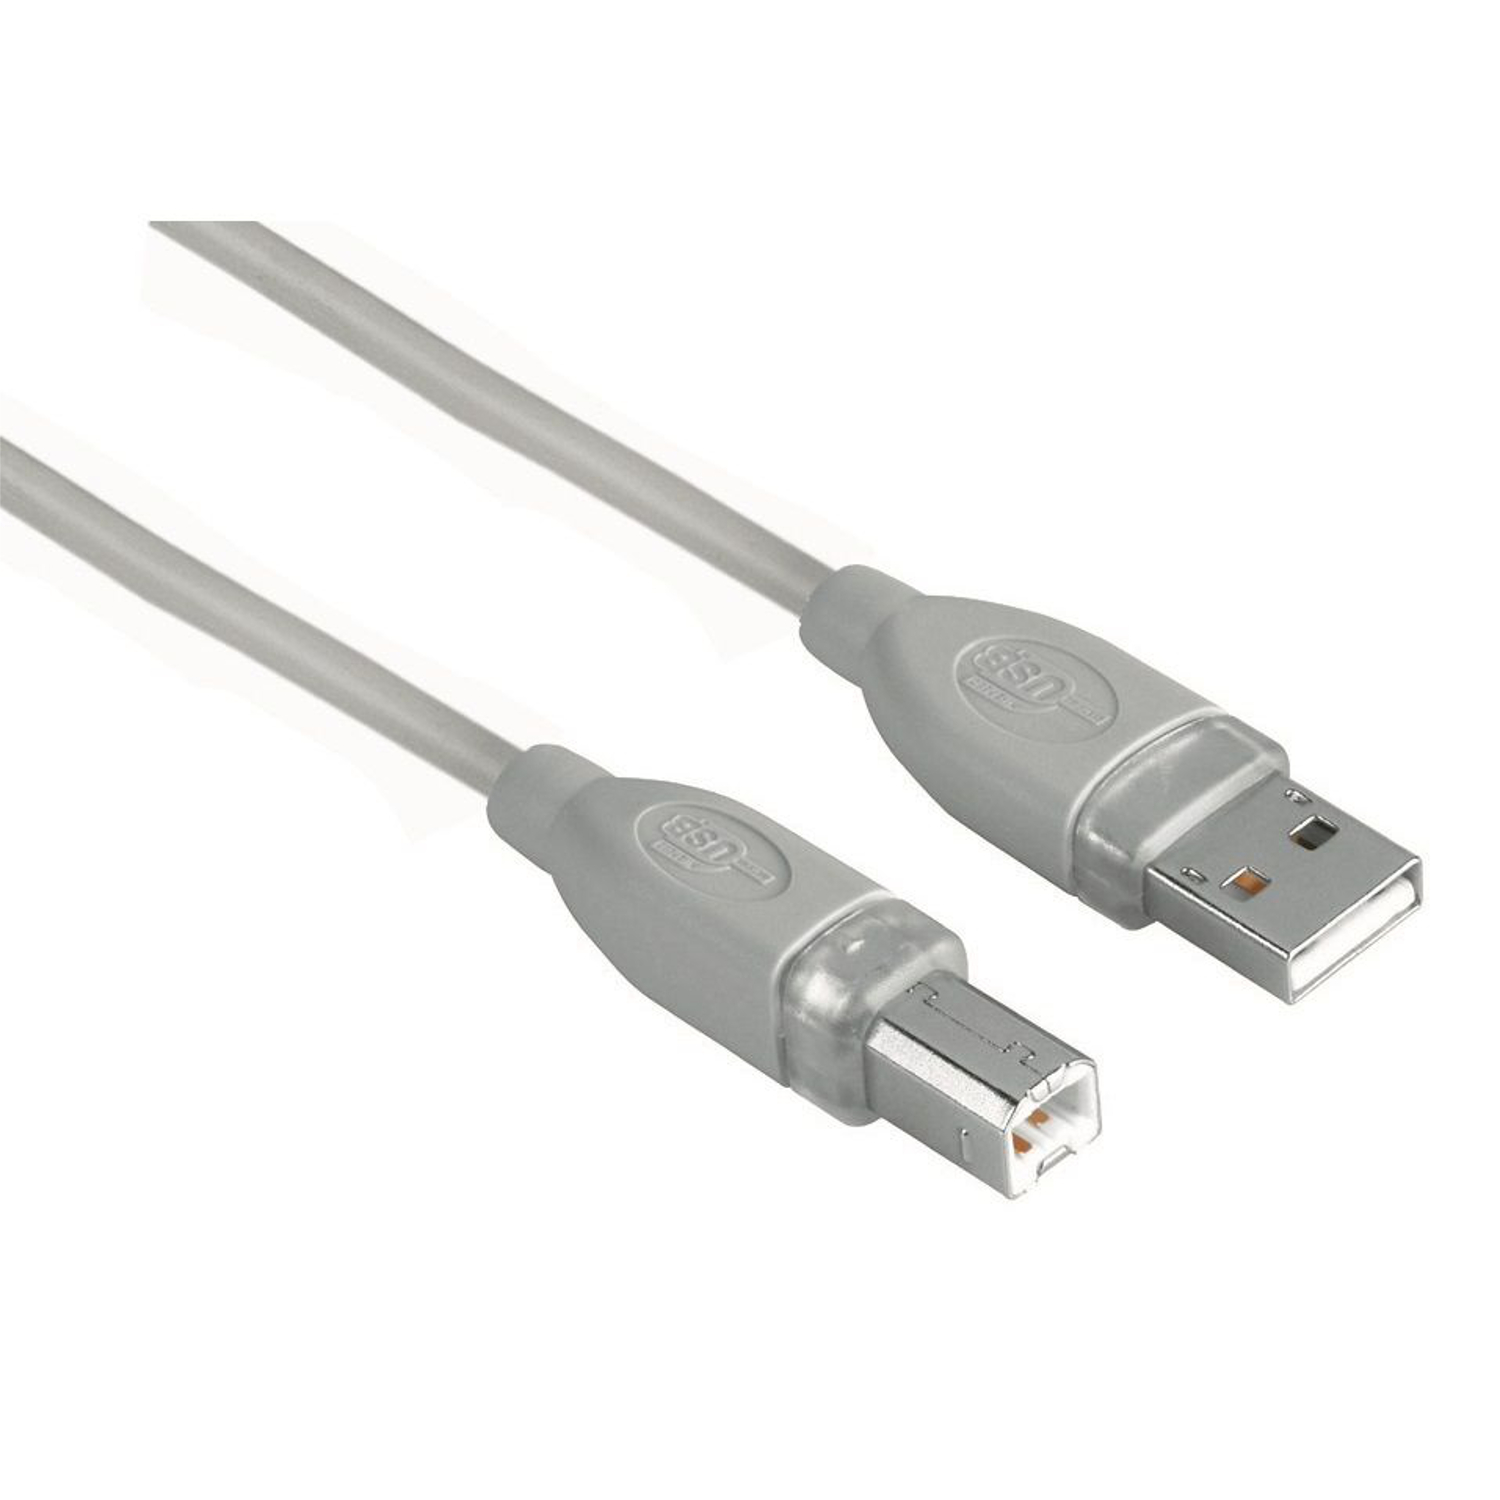  Cablu USB 2.0 Hama 45022 Tip A-B, 3 m 